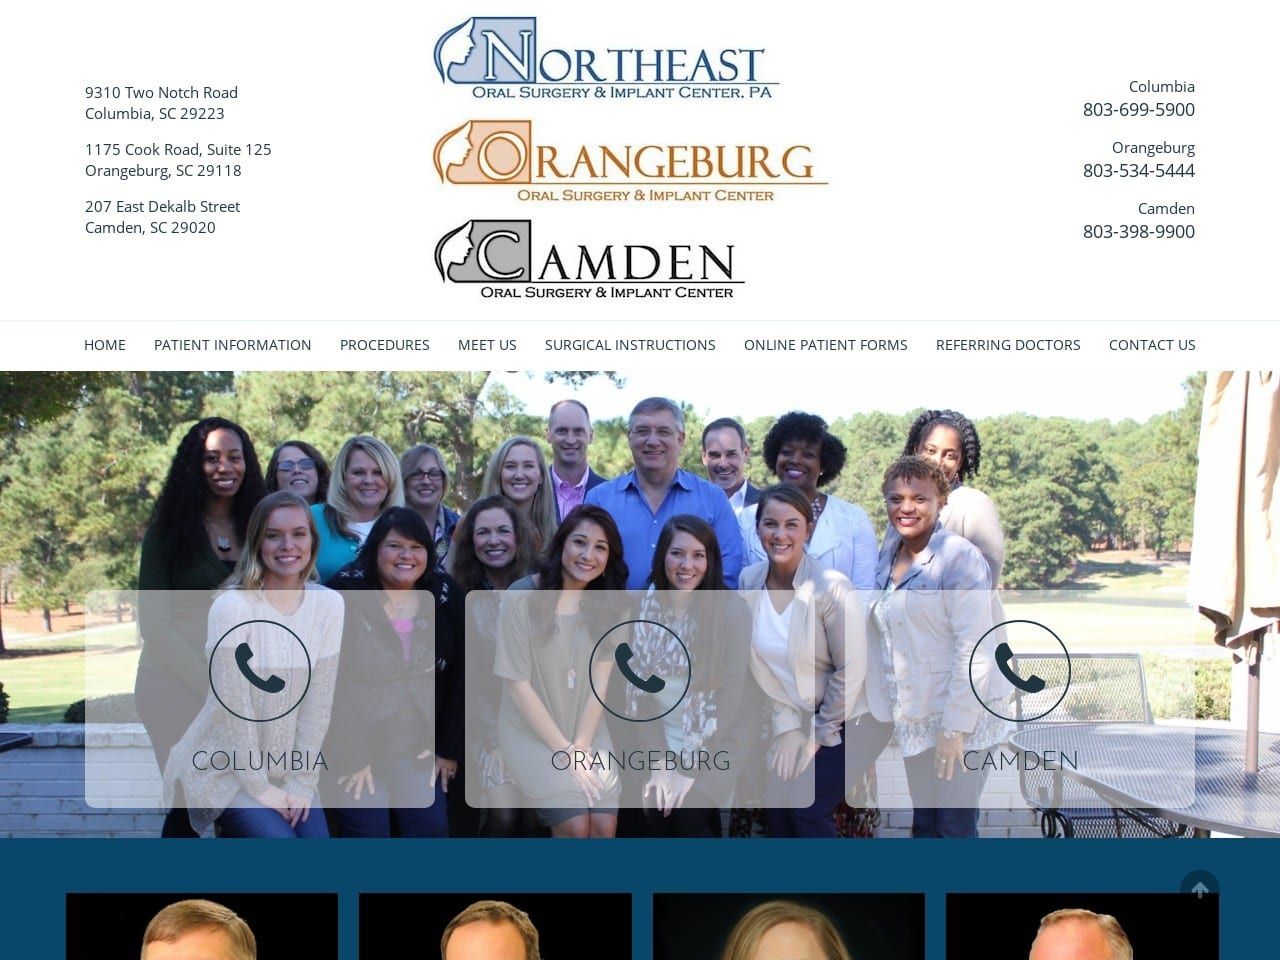 Northeast Oral Surgery & Implant Center Website Screenshot from neoralsurgery.com